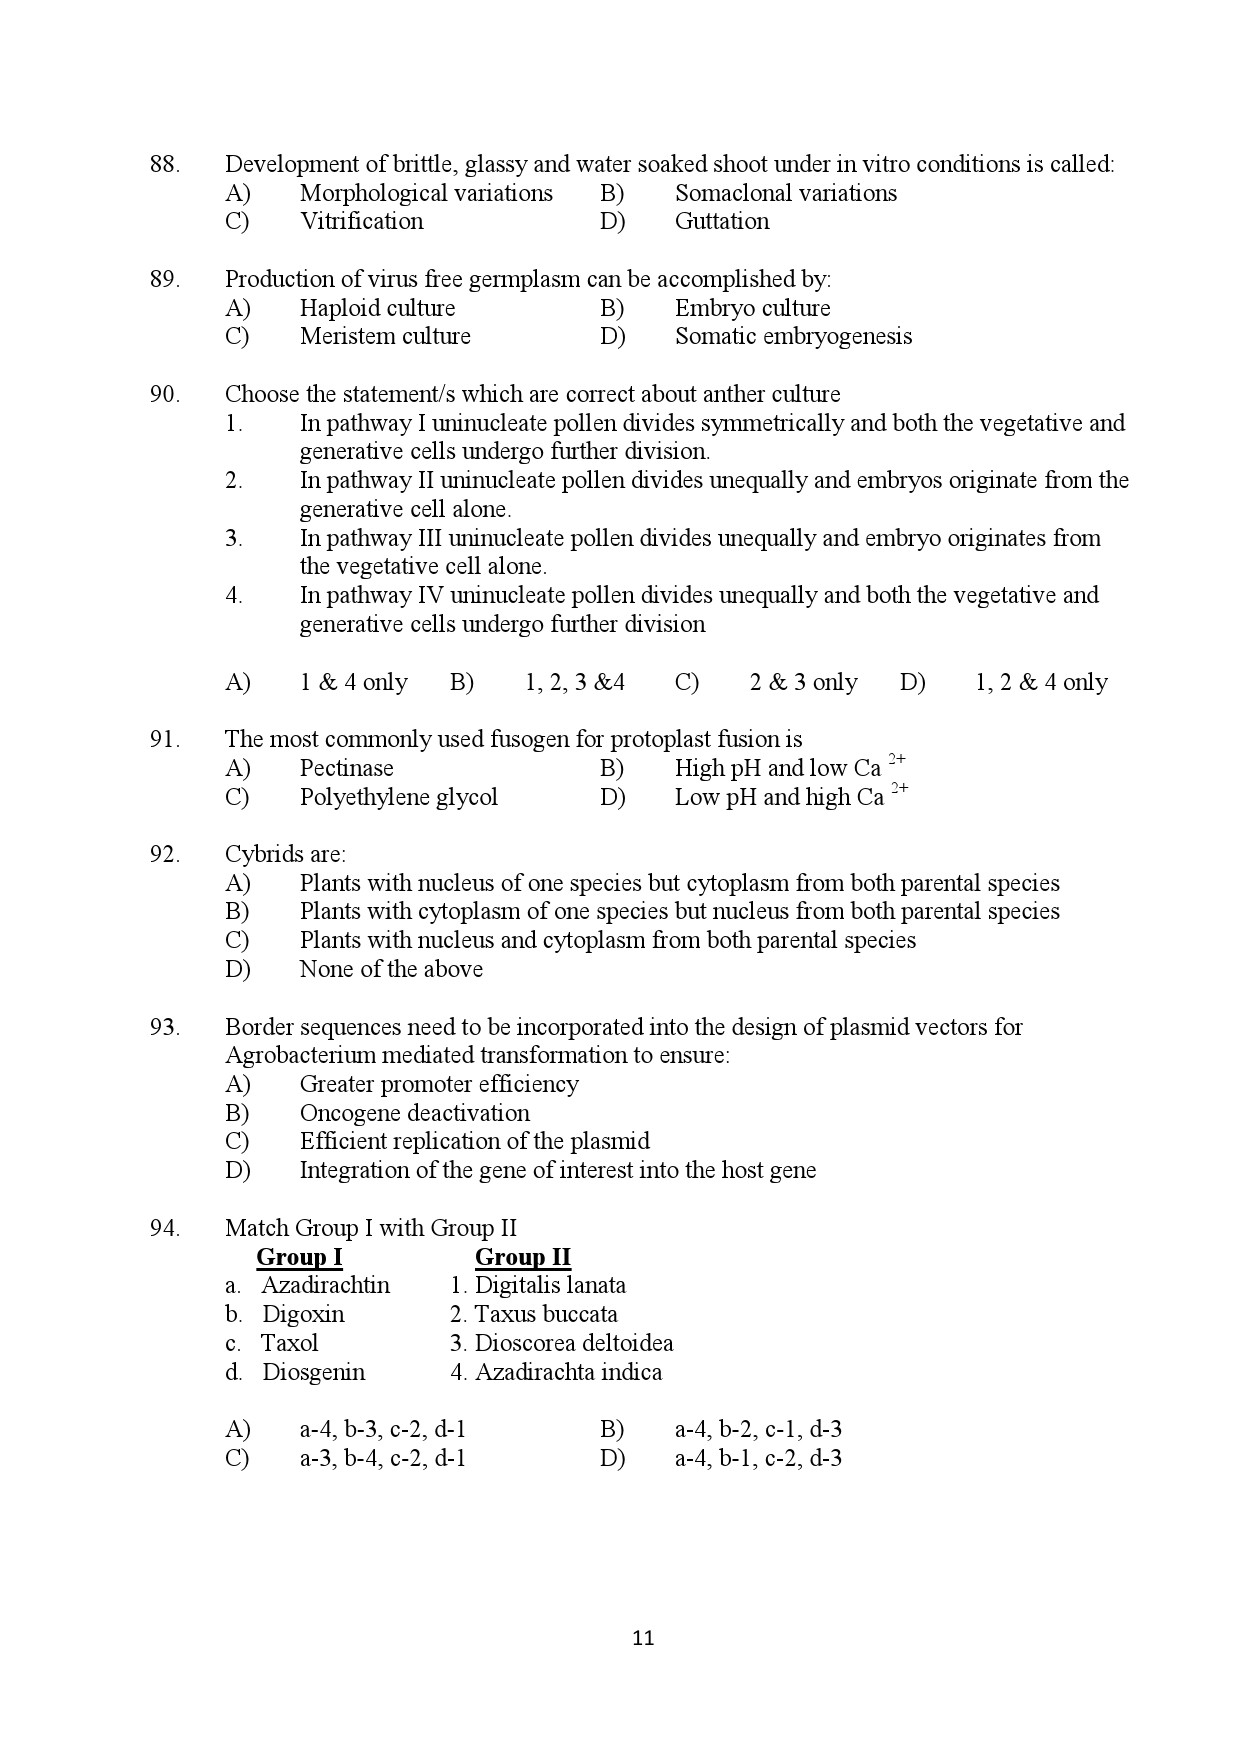 Kerala SET Biotechnology Exam Question Paper February 2020 11